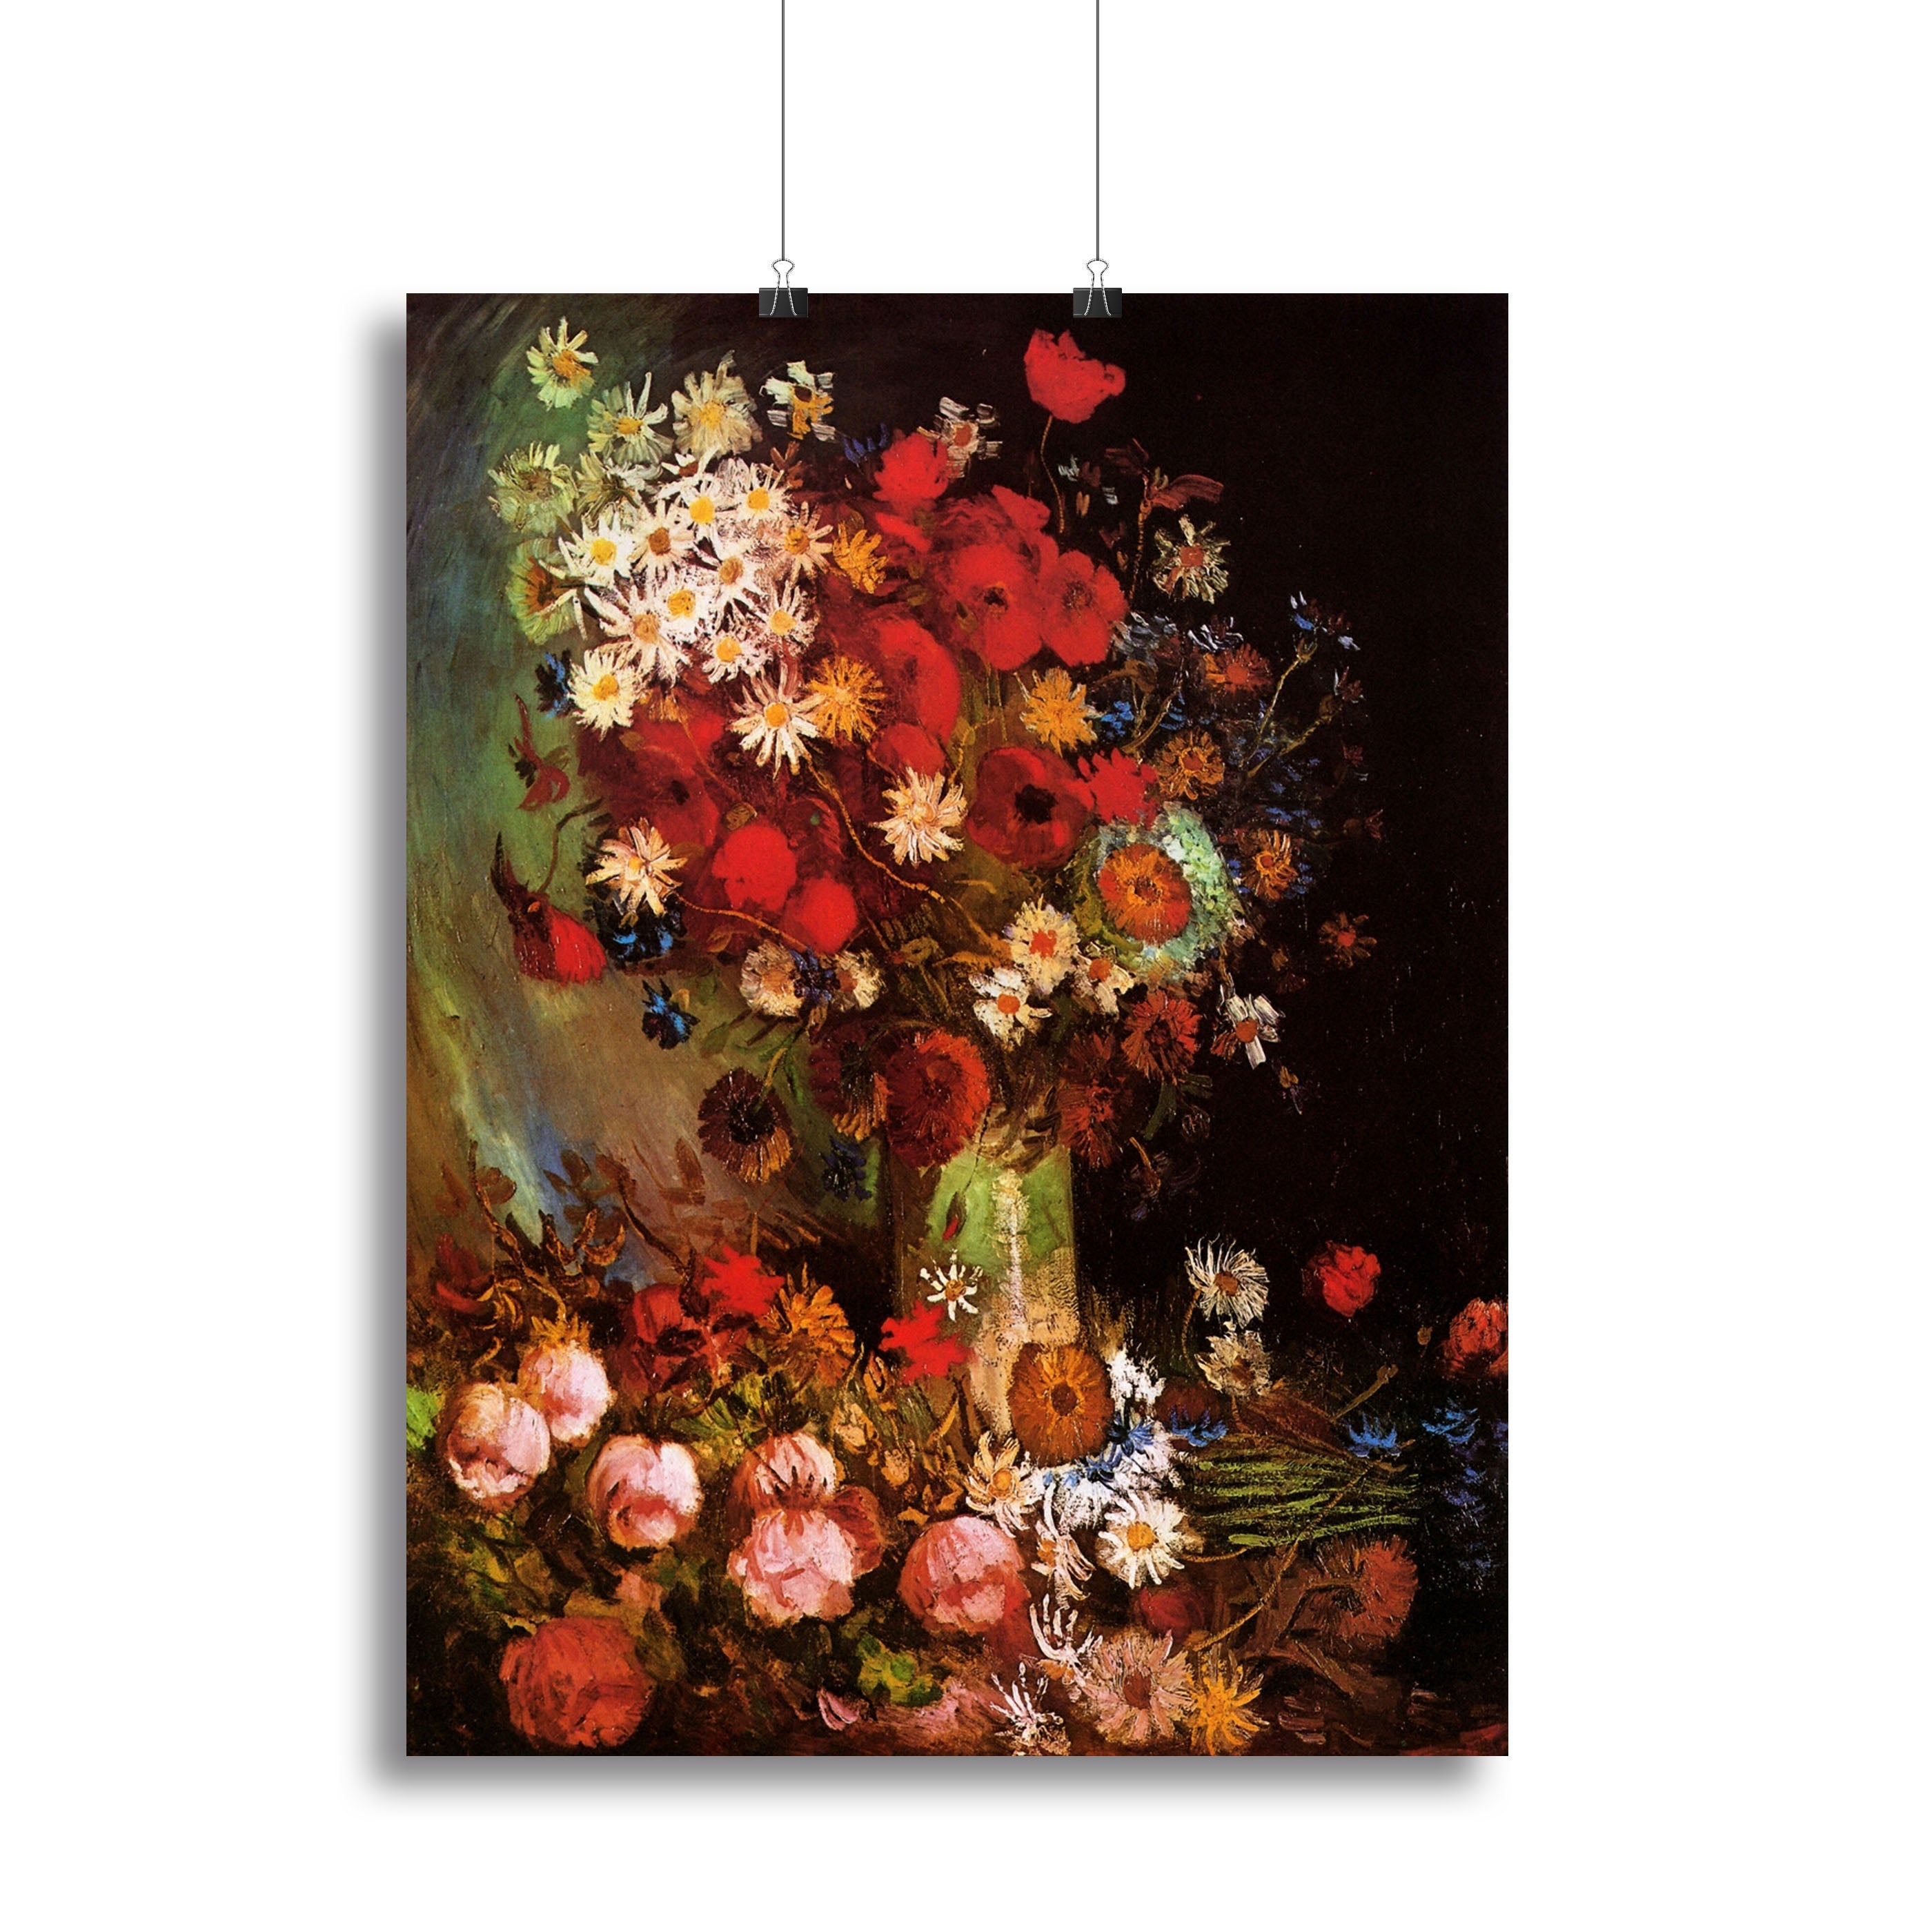 Vase with Poppies Cornflowers Peonies and Chrysanthemums by Van Gogh Canvas Print or Poster - Canvas Art Rocks - 2